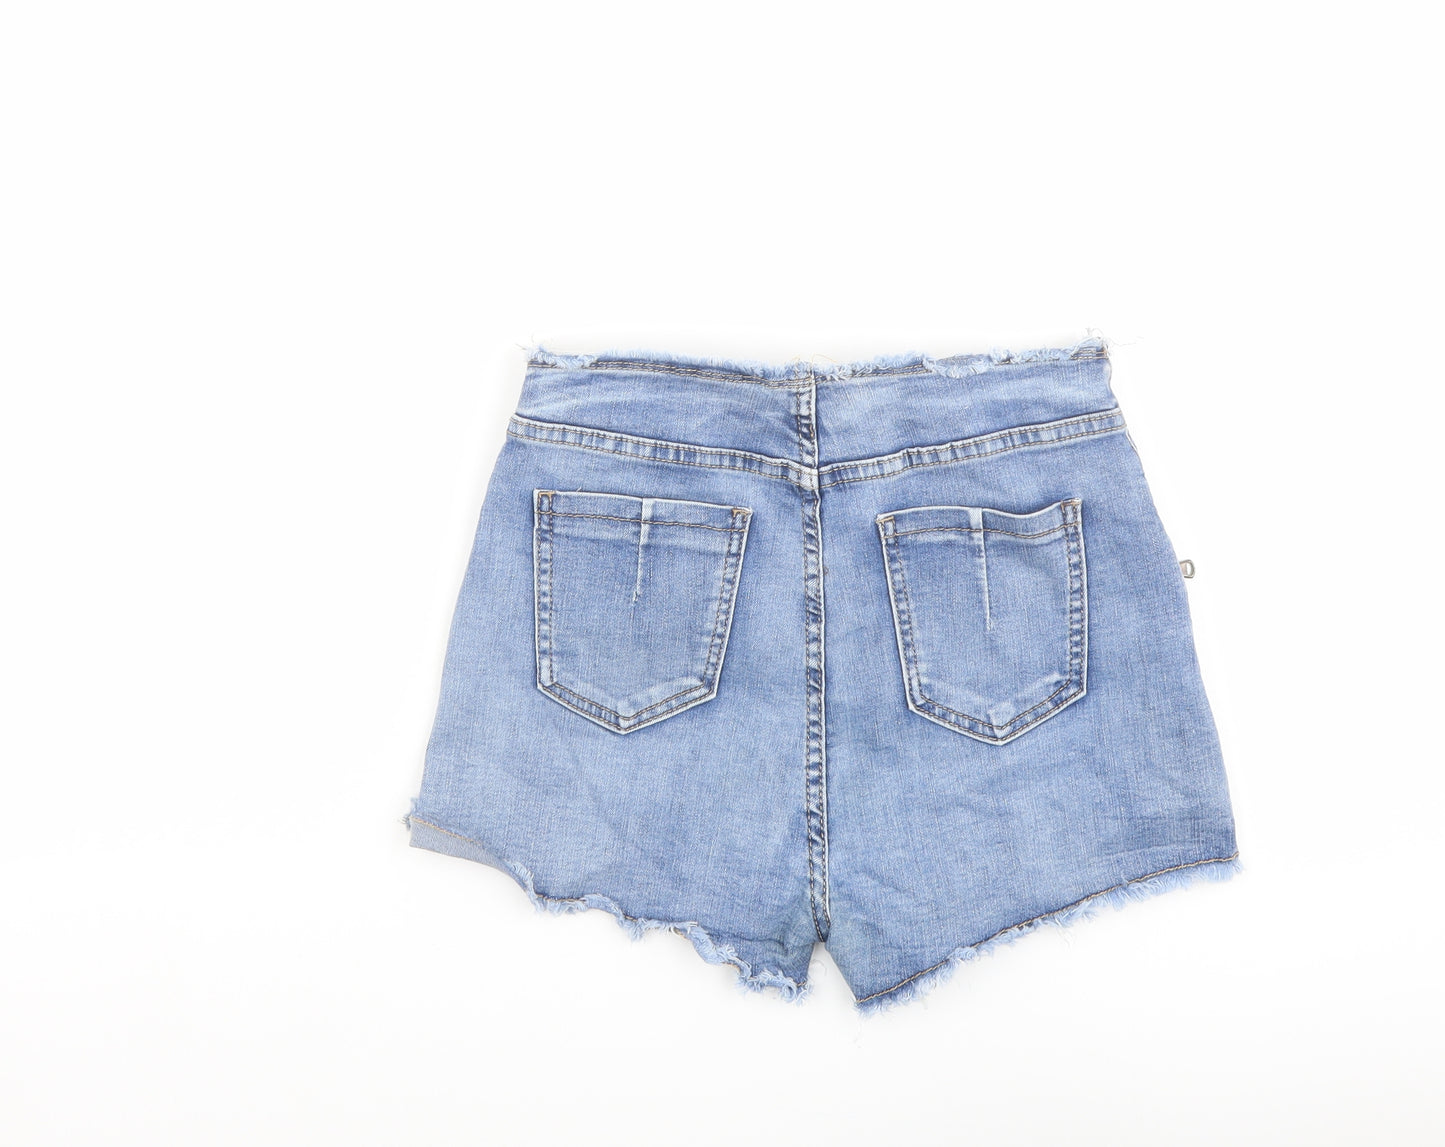 Daysie Womens Blue Cotton Cut-Off Shorts Size 6 L3 in Regular Drawstring